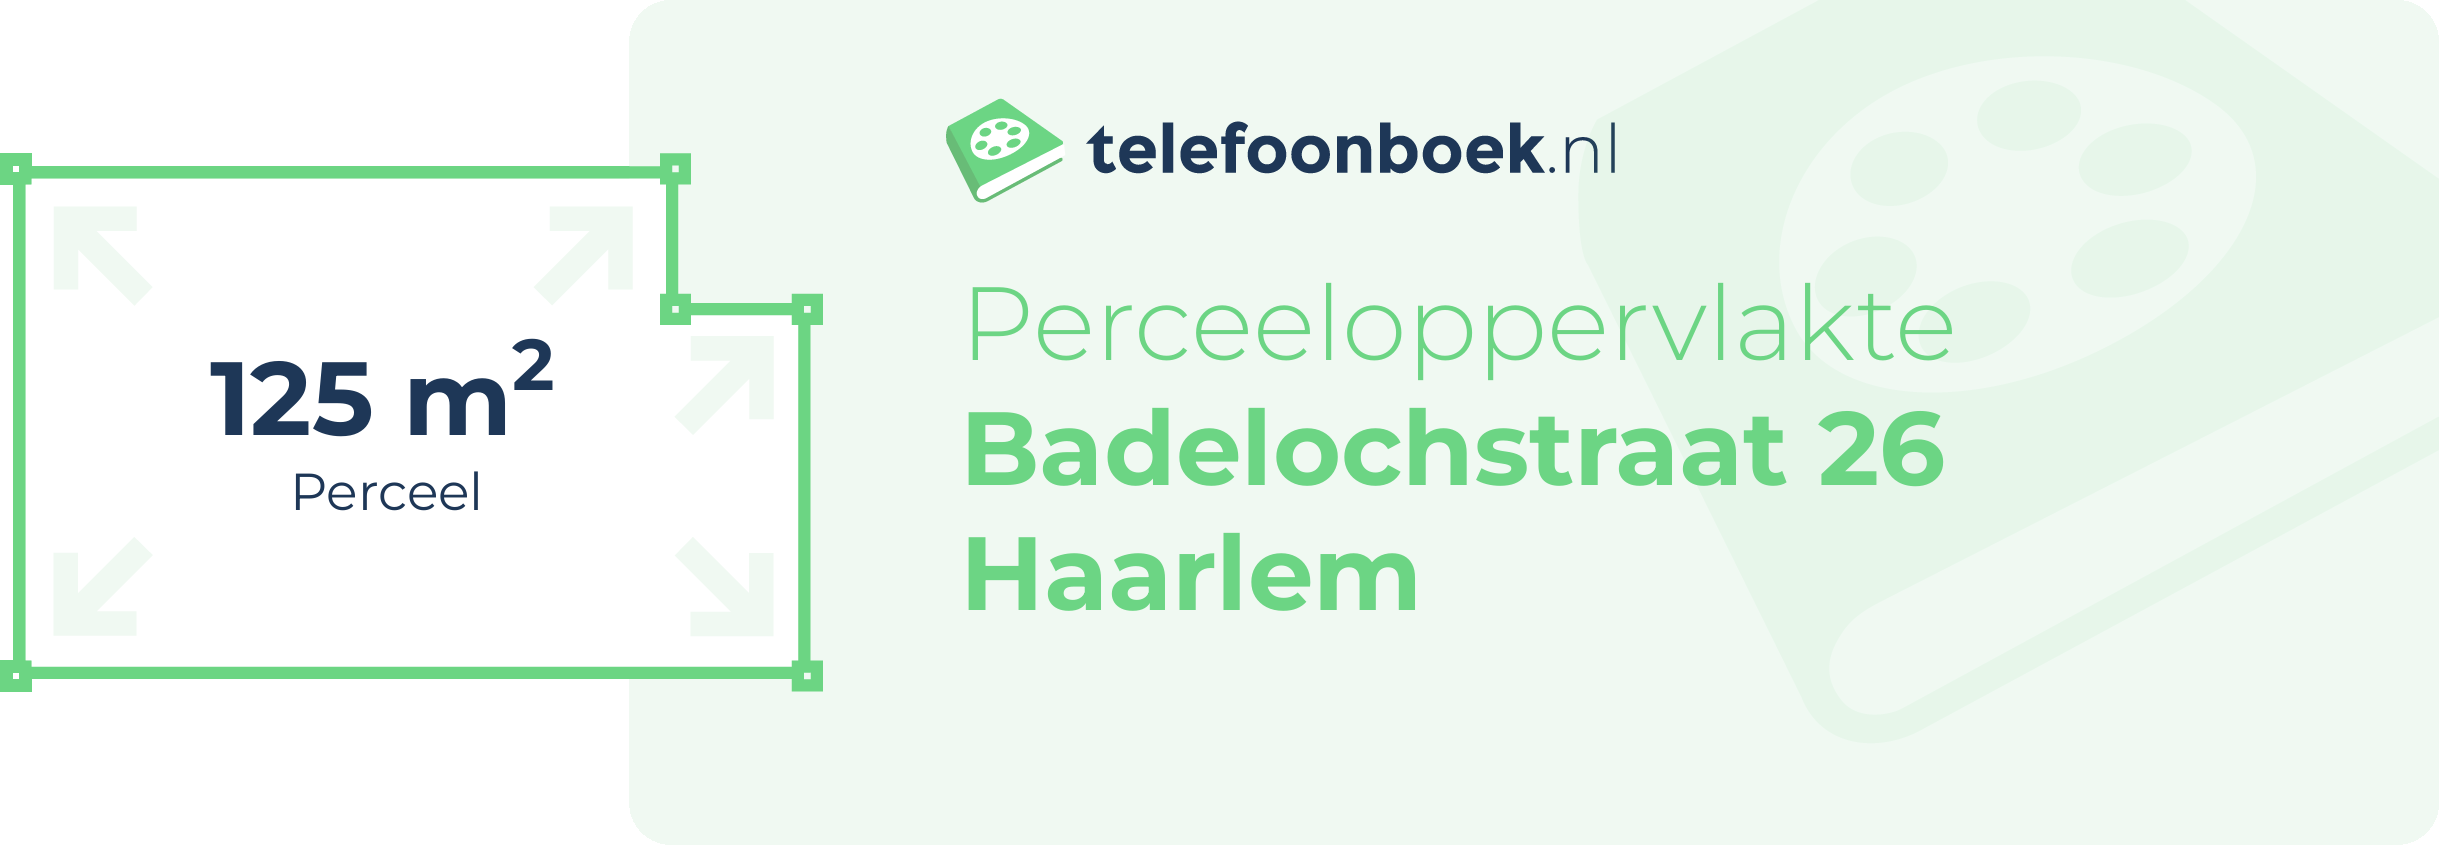 Perceeloppervlakte Badelochstraat 26 Haarlem